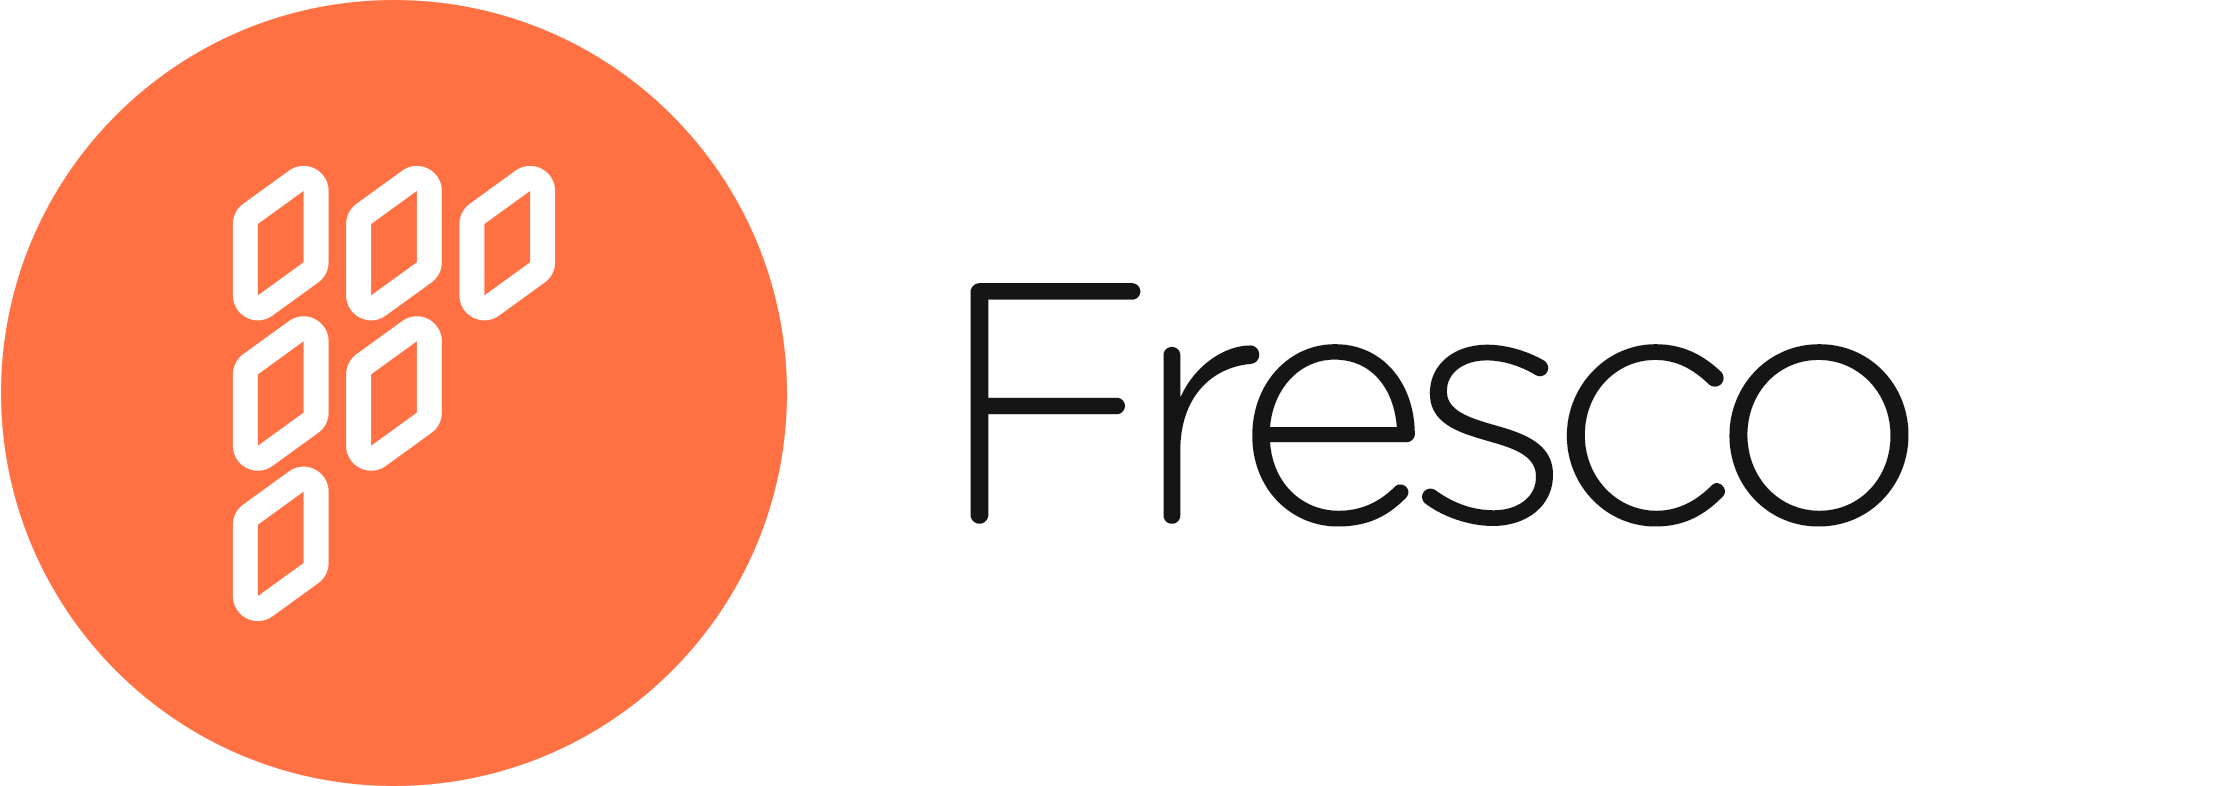 Fresco Logo - Getting Started with Fresco | Fresco